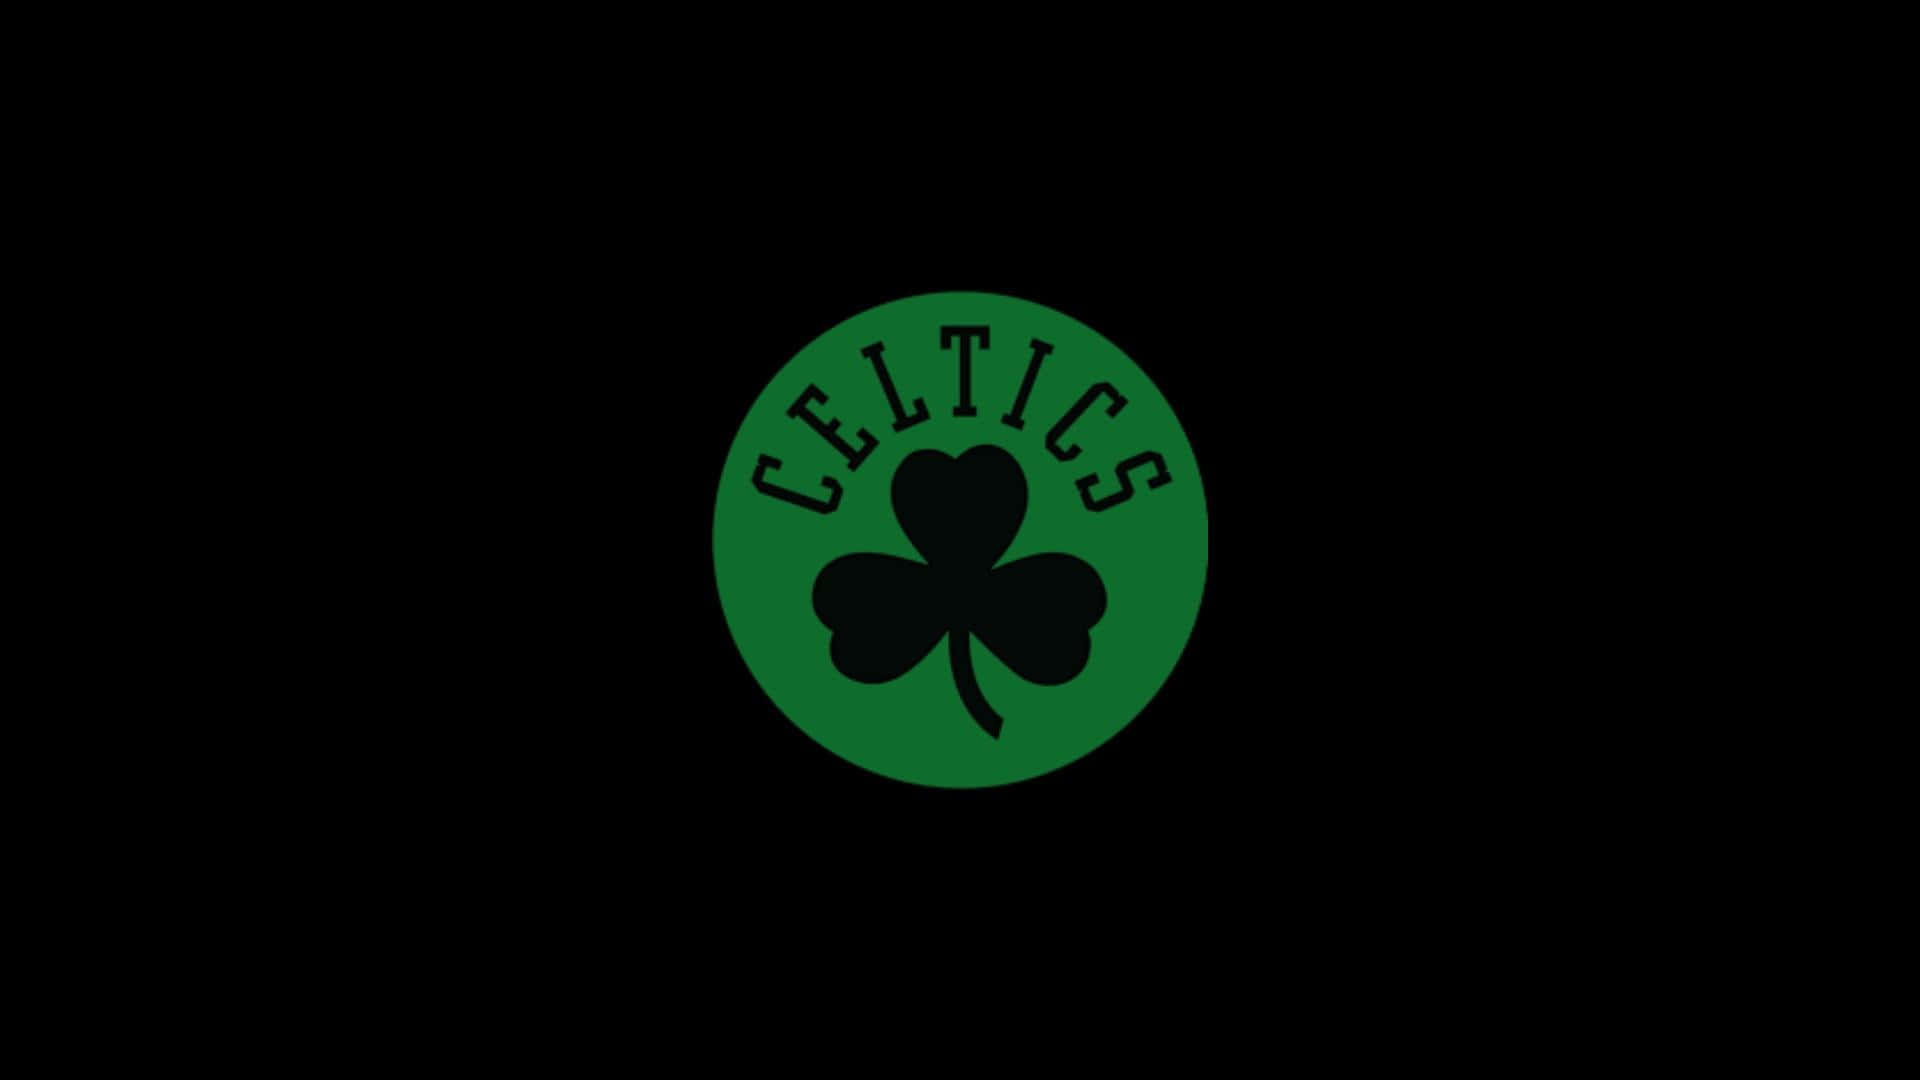 Download Celtics Neon Logo Wallpaper